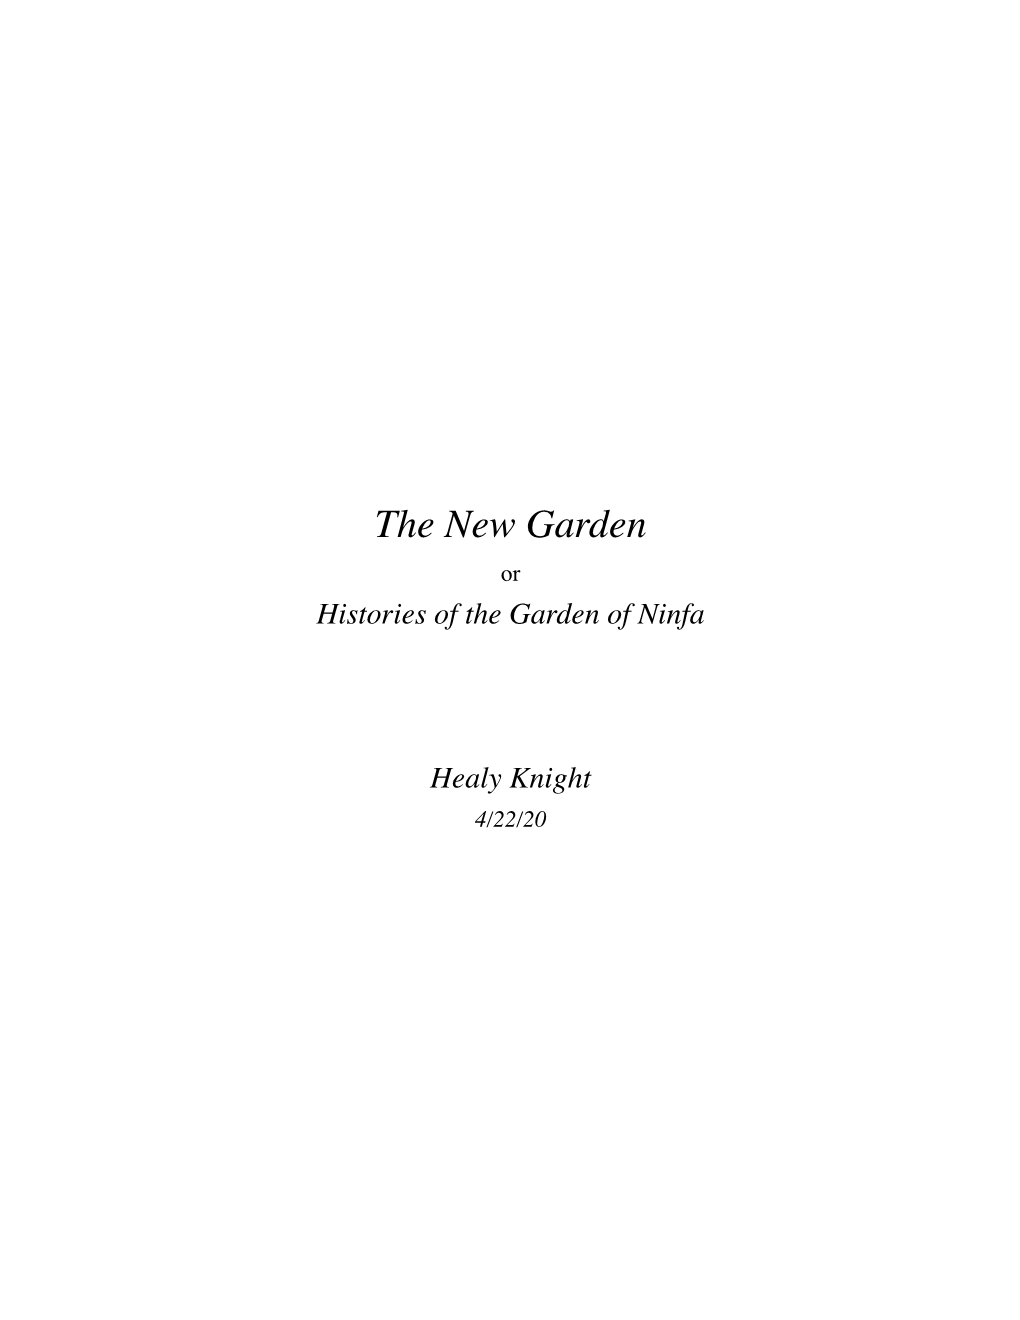 The New Garden: Histories of the Garden of Ninfa